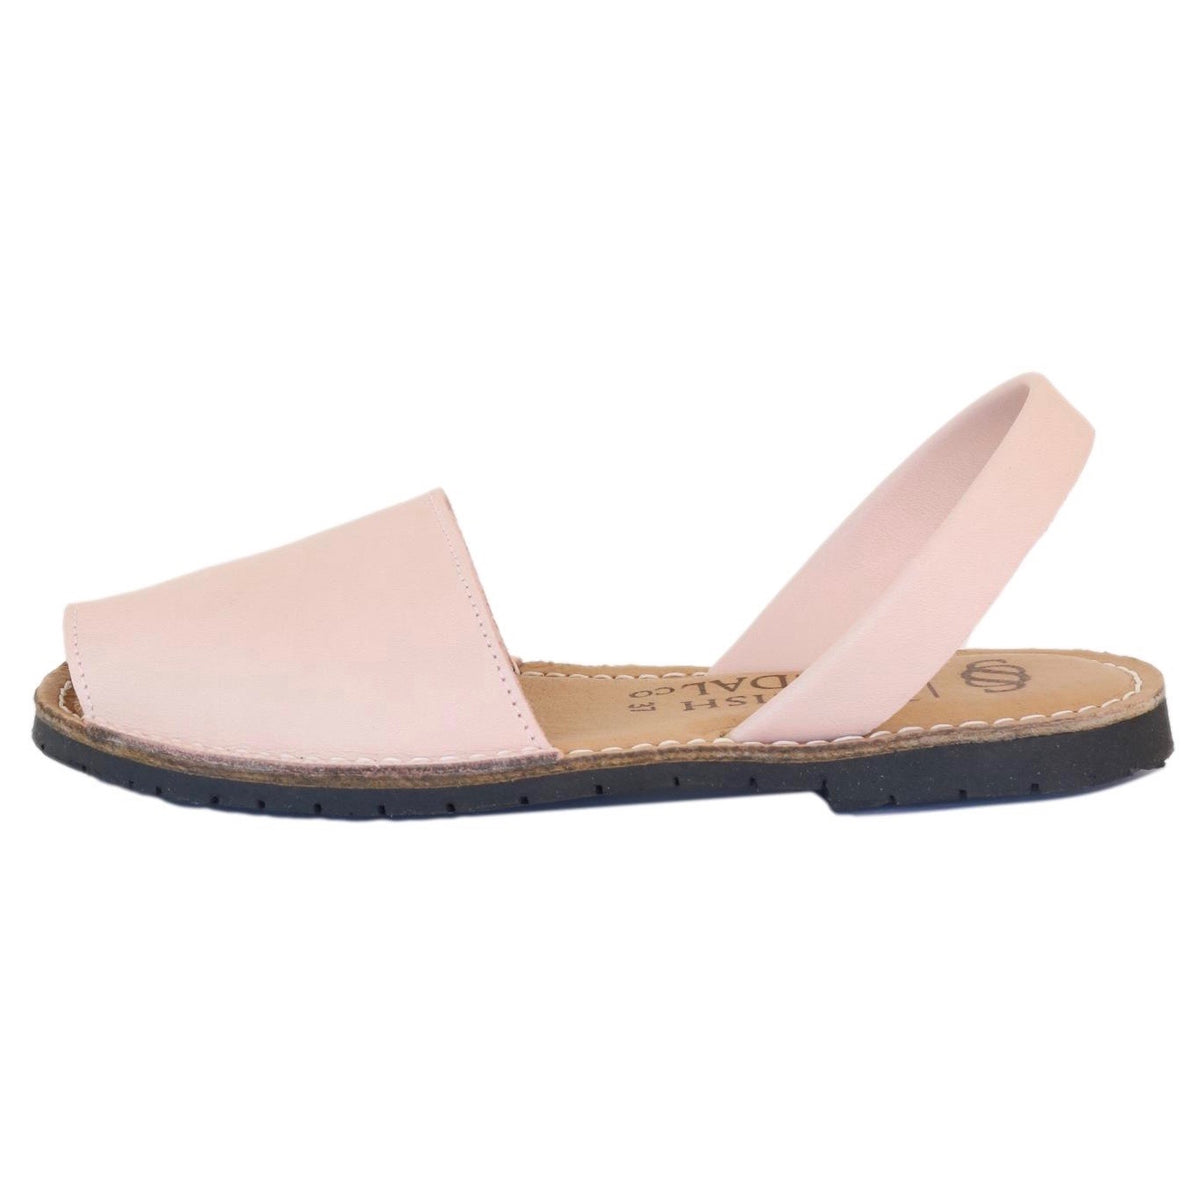 Chalk pink sandals - The Spanish Sandal Company